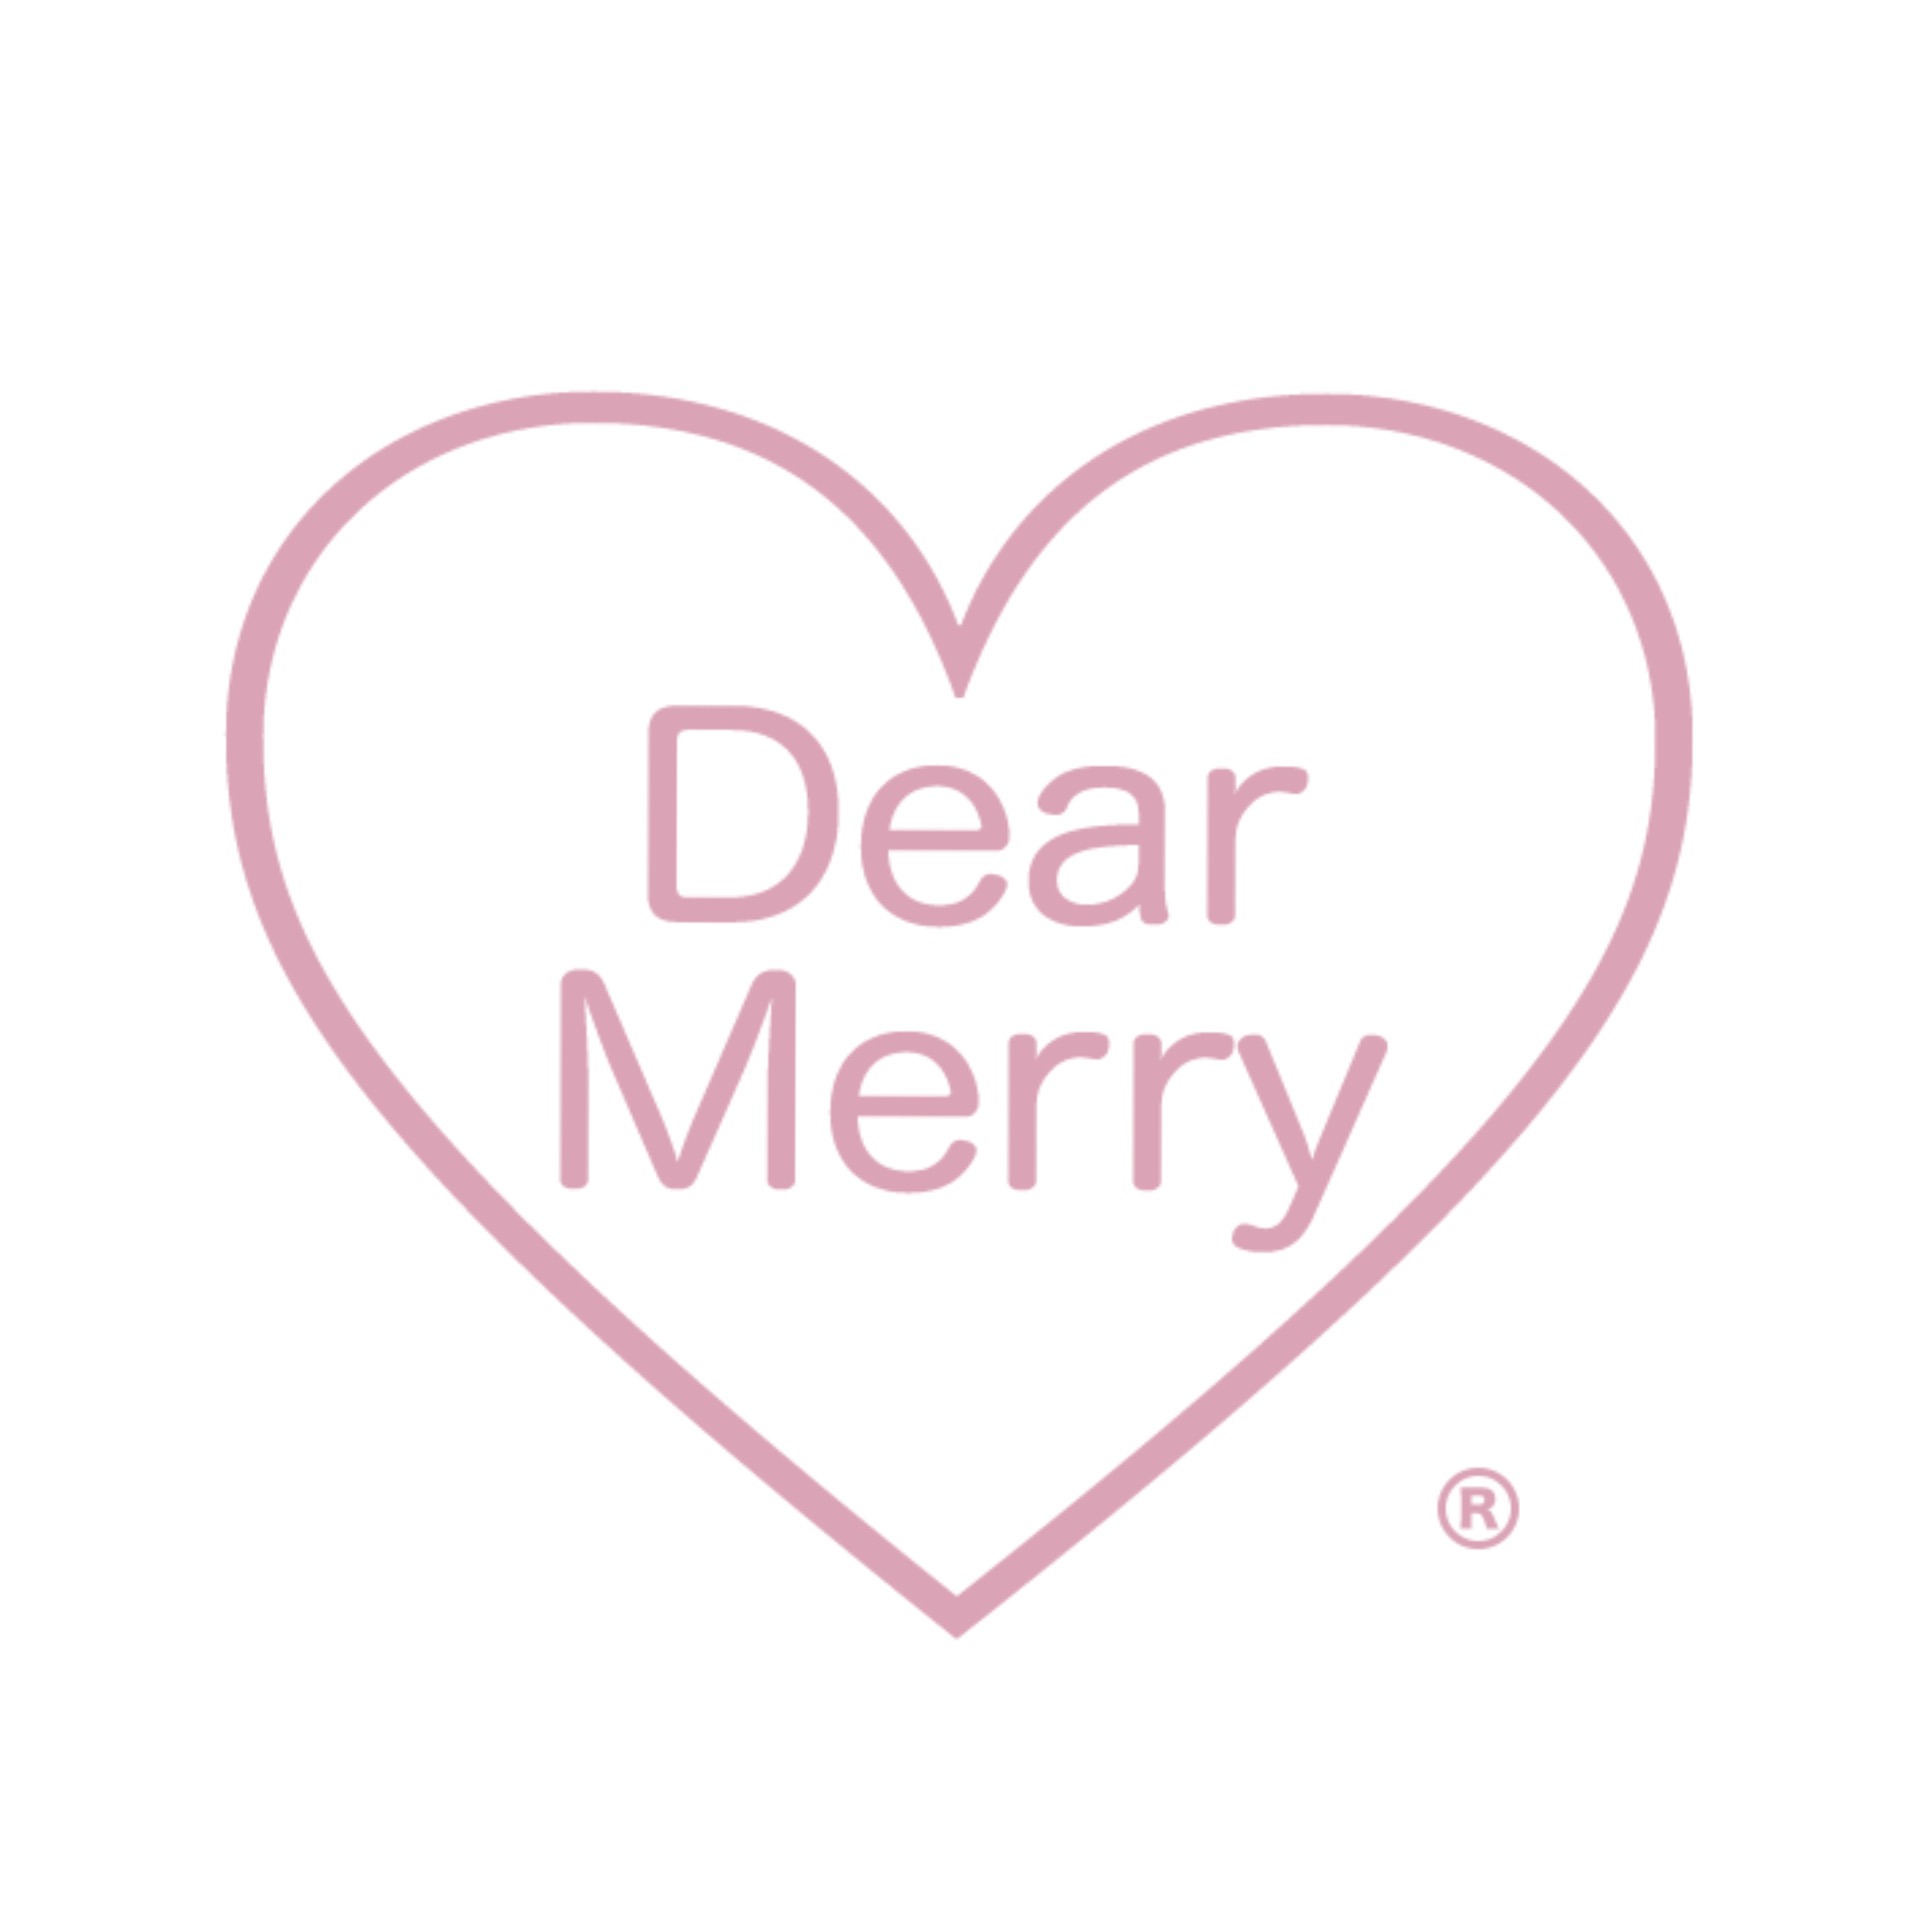 Dear Merry